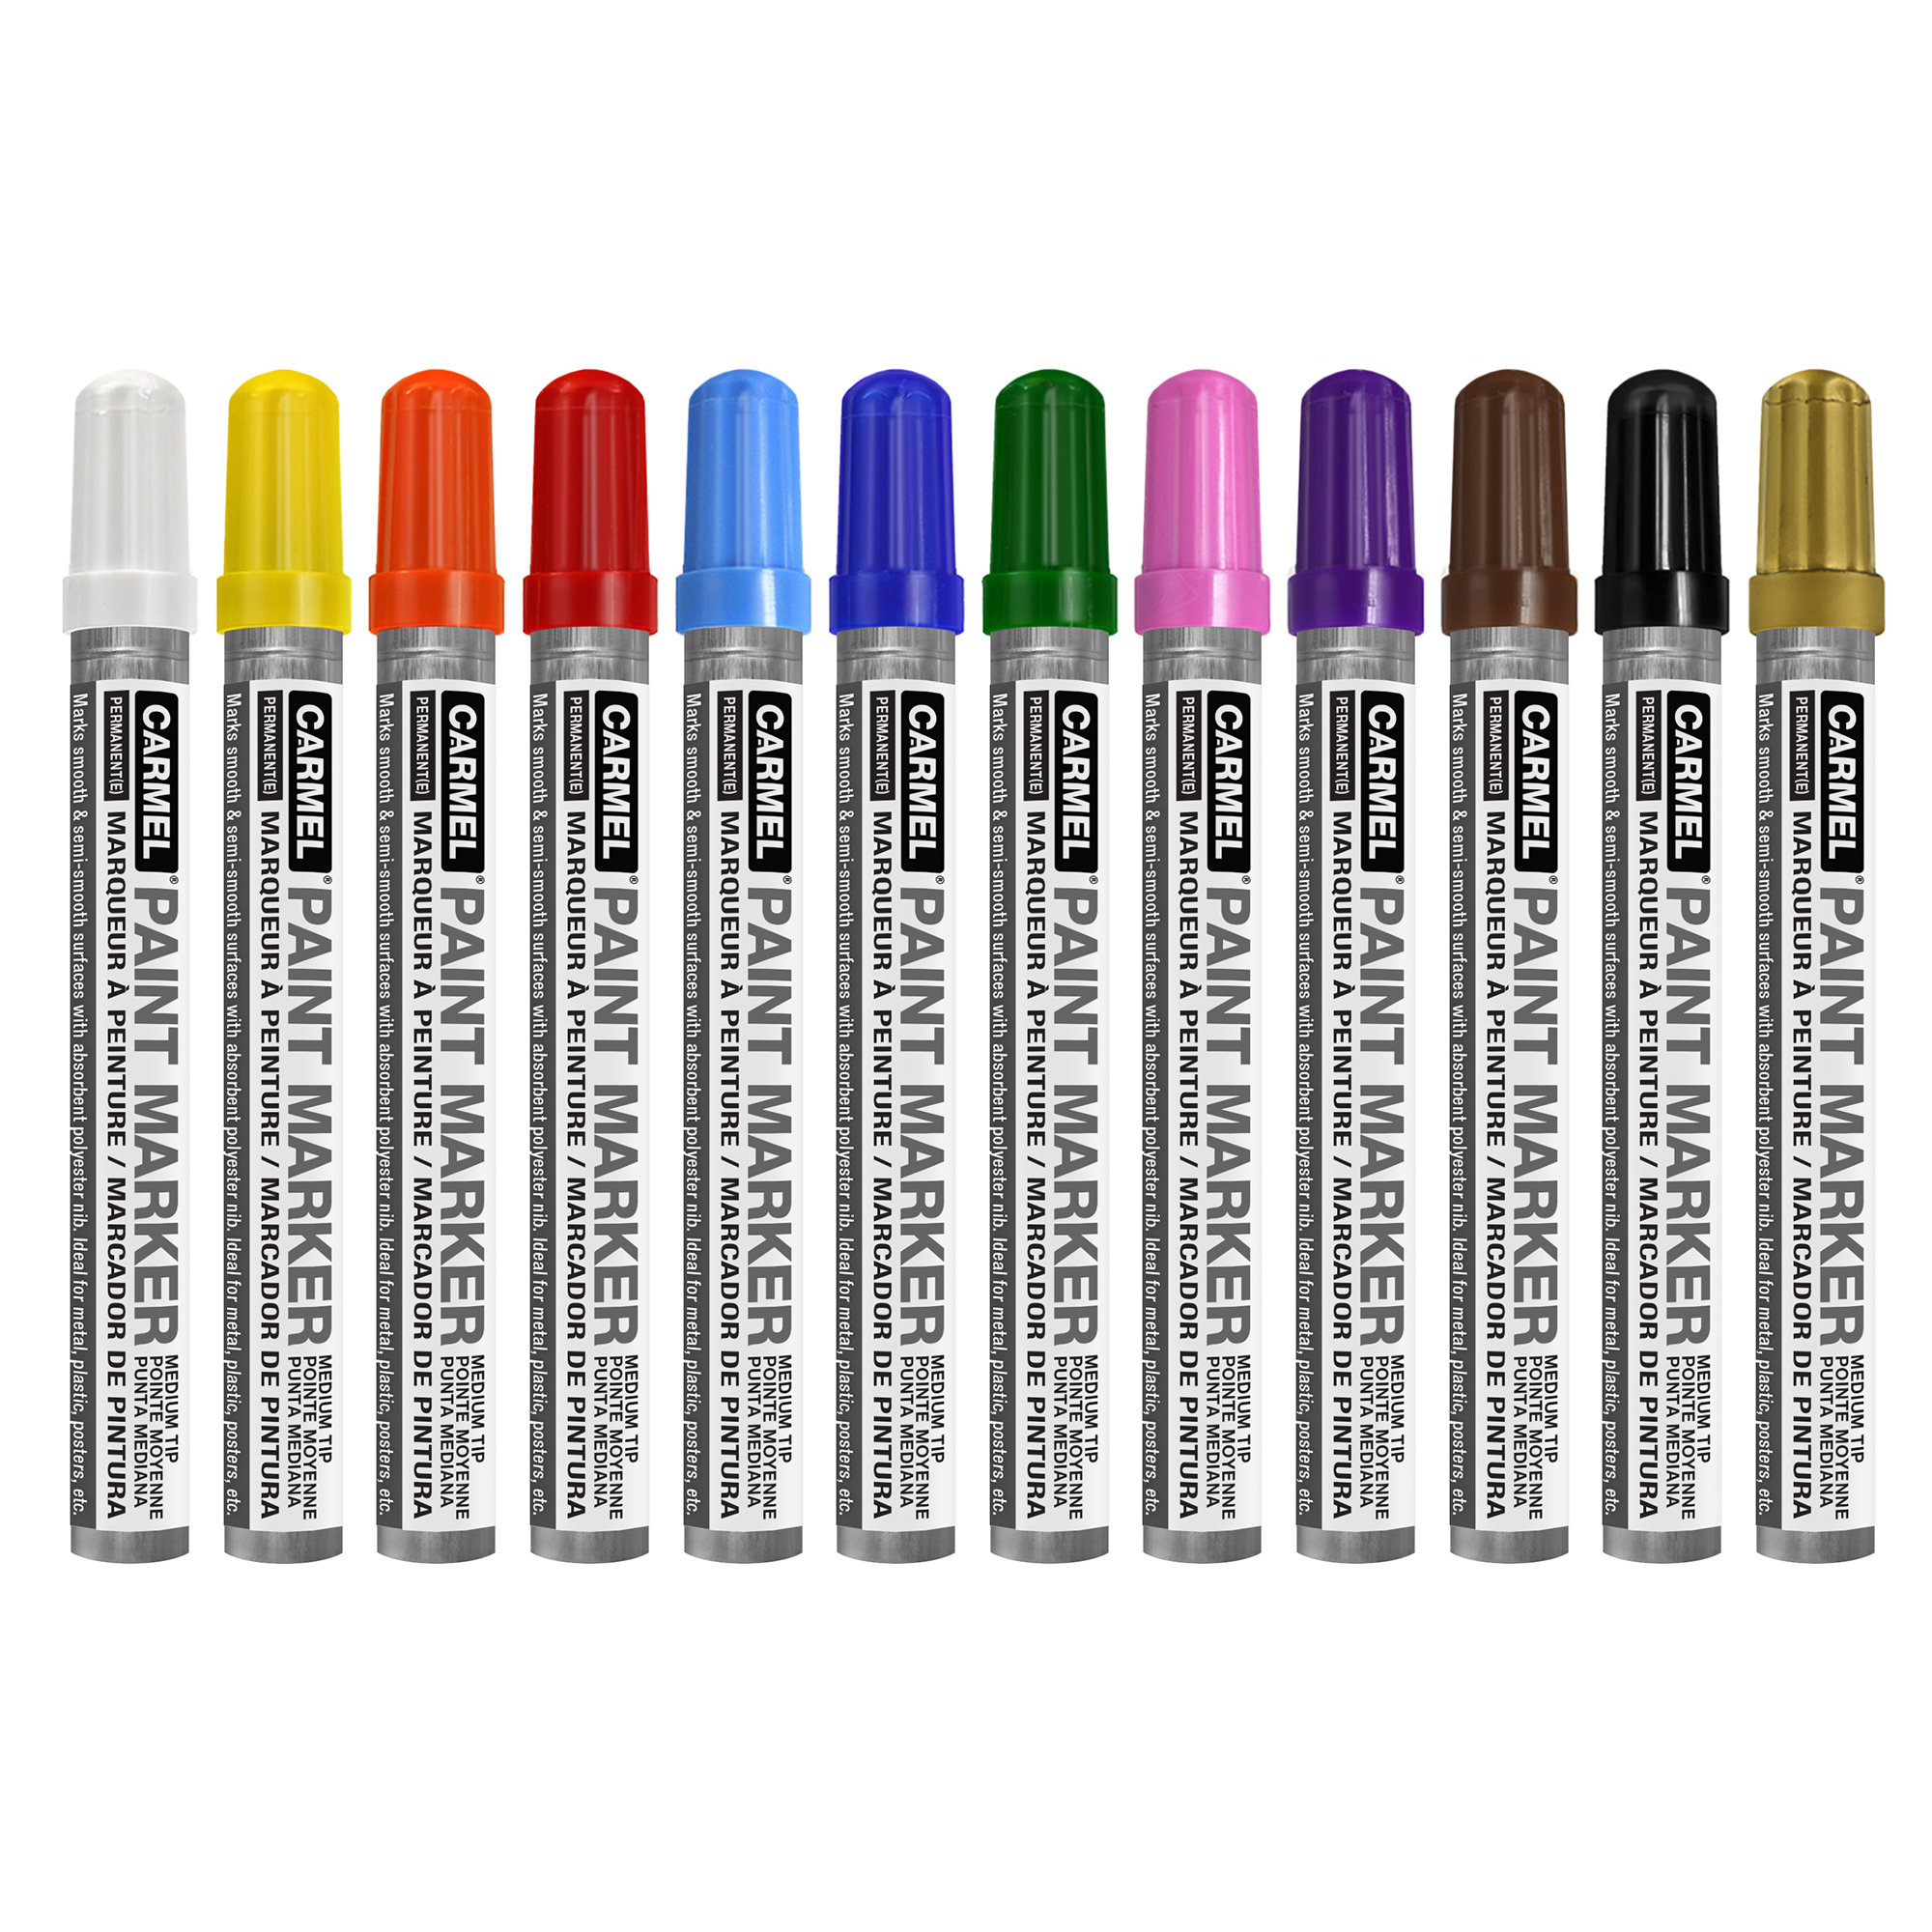 Carmel Paint Marker Medium Tip Pack of 12 assorted Colors, Multi